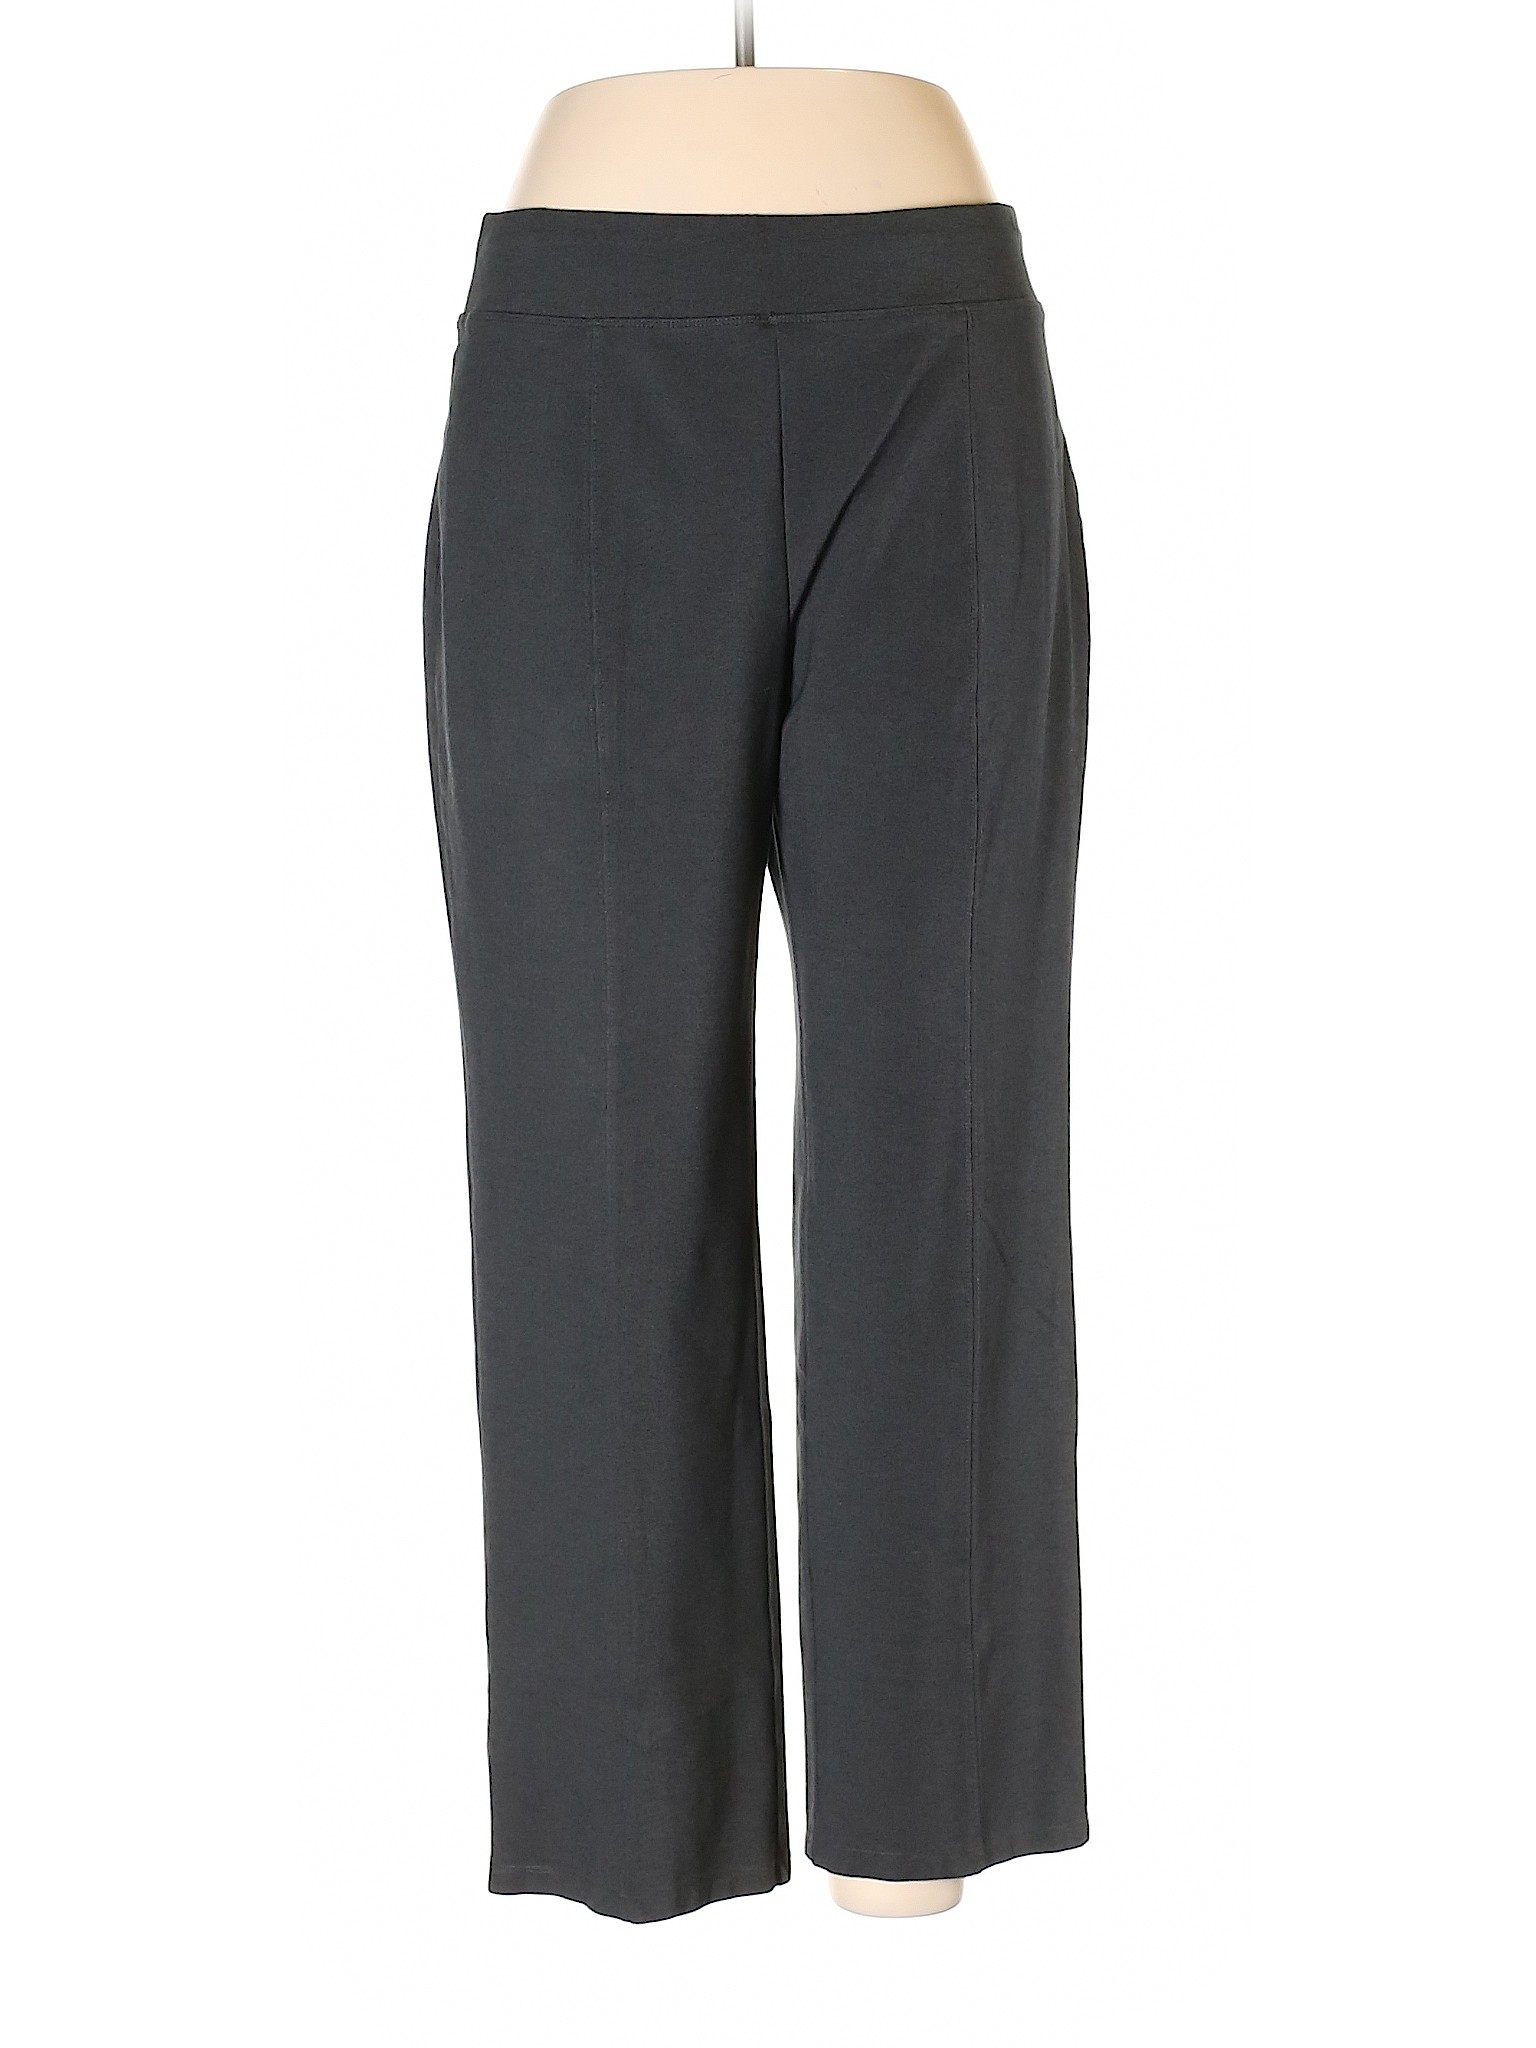 Draper's & Damon's Solid Gray Casual Pants Size L - 89% off | thredUP